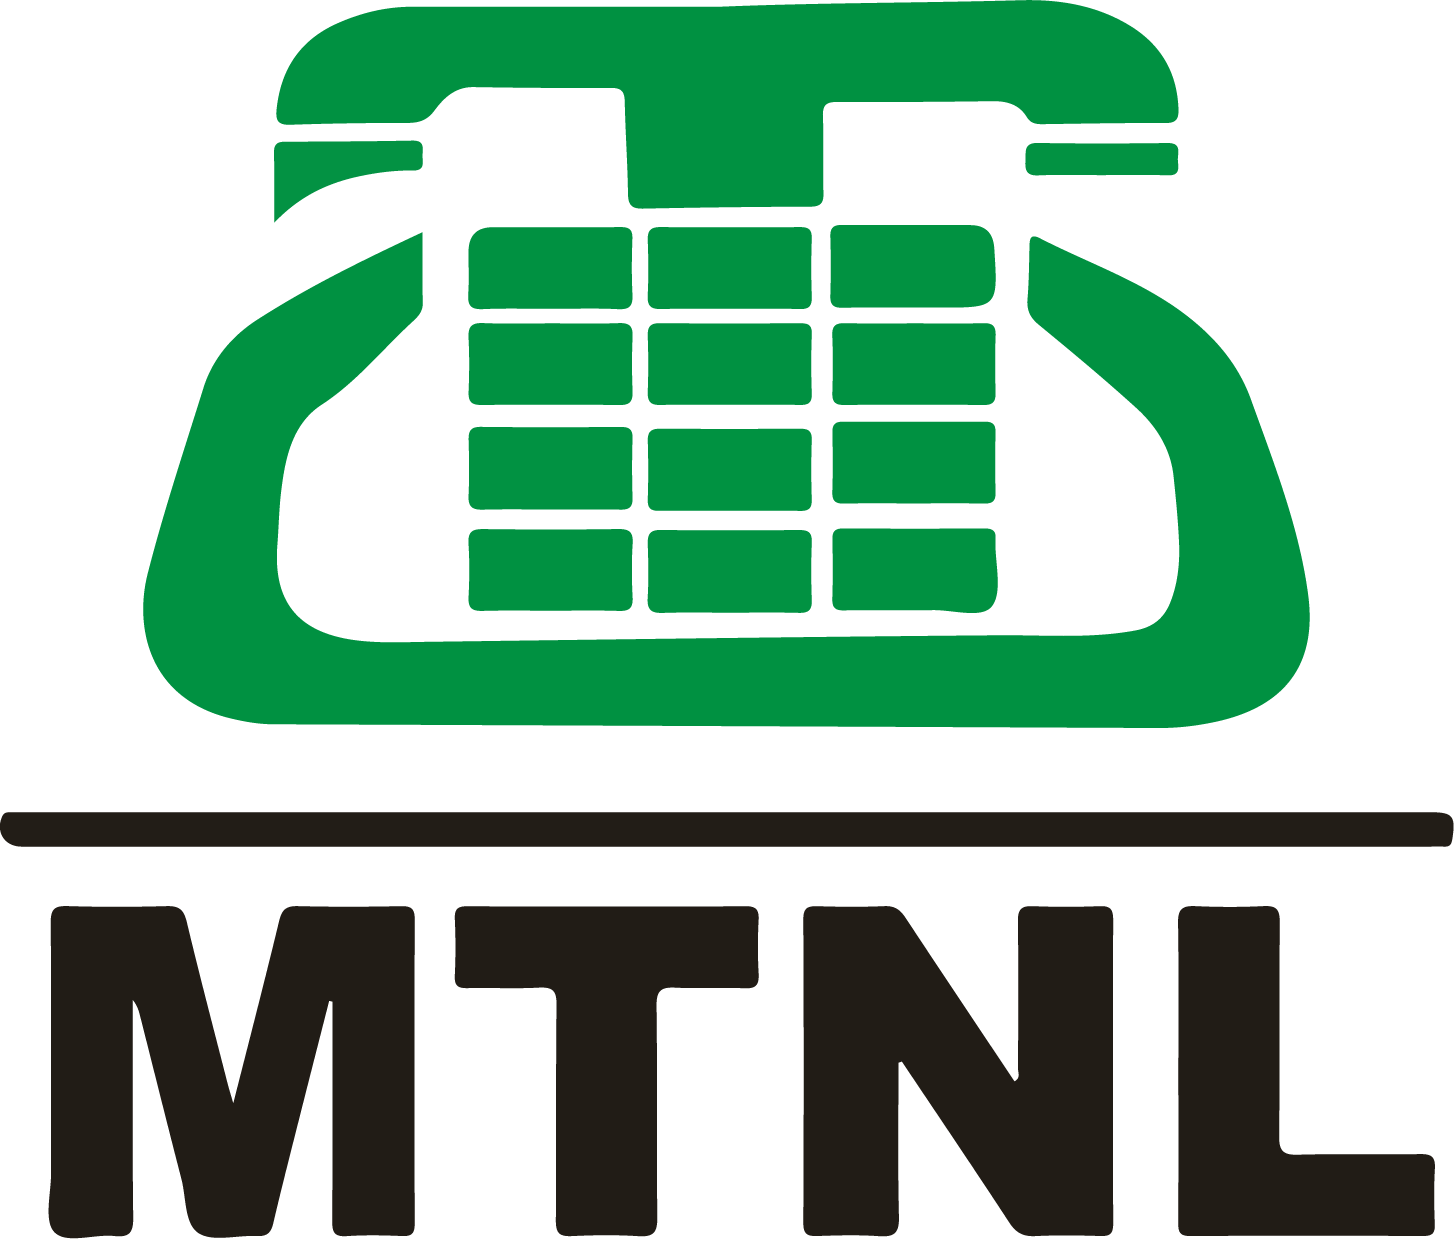 Mahanagar Telephone Nigam logo large (transparent PNG)